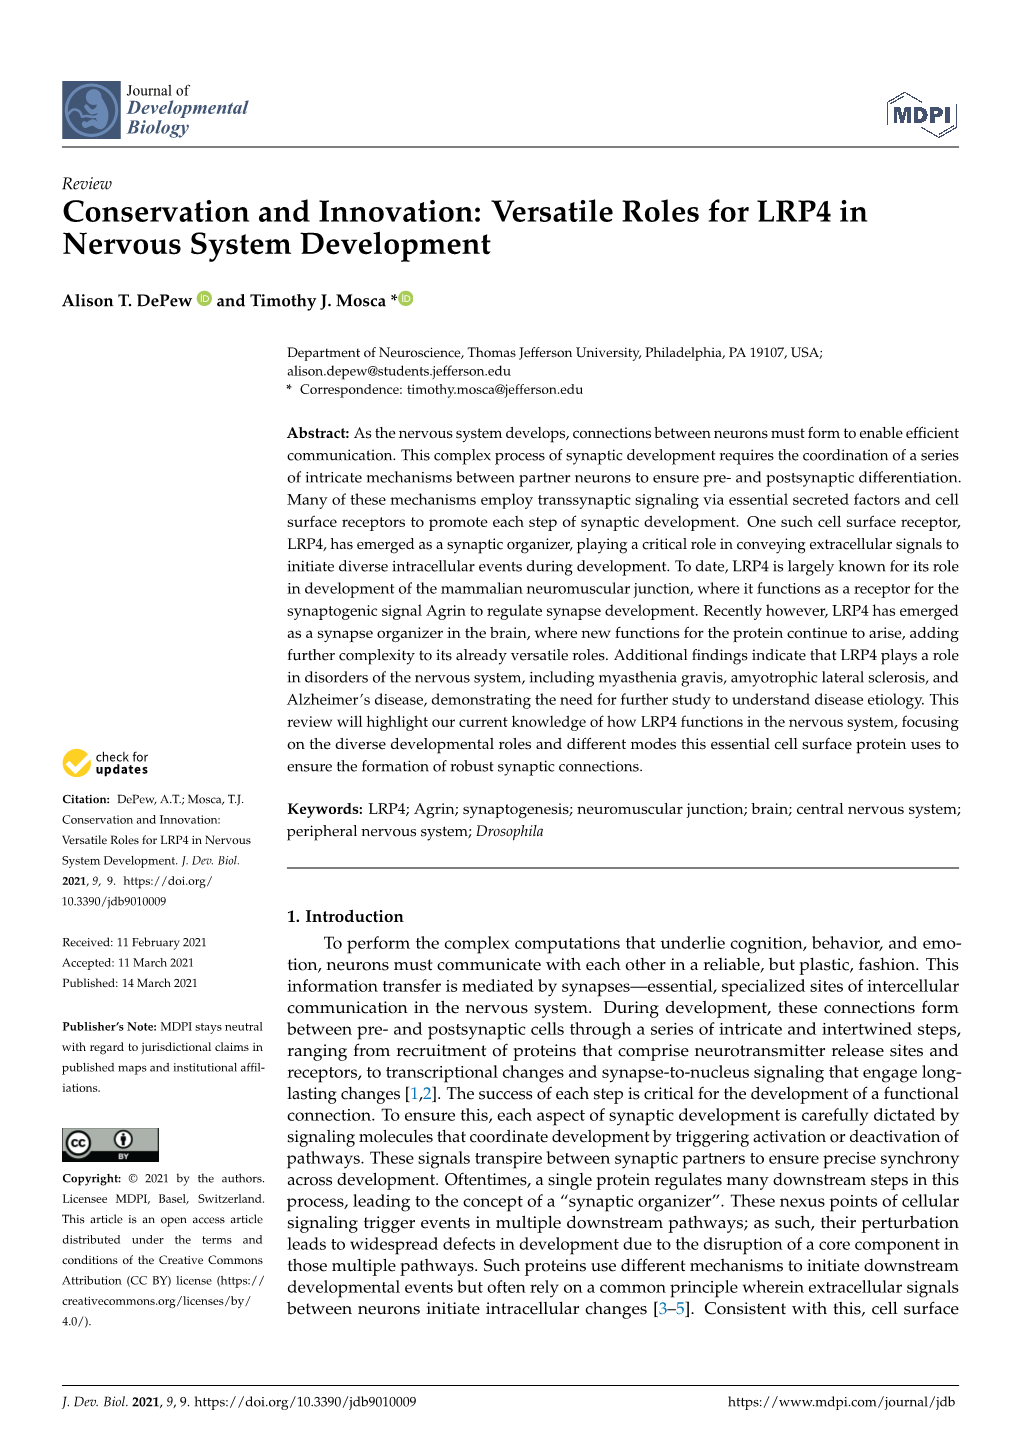 Versatile Roles for LRP4 in Nervous System Development